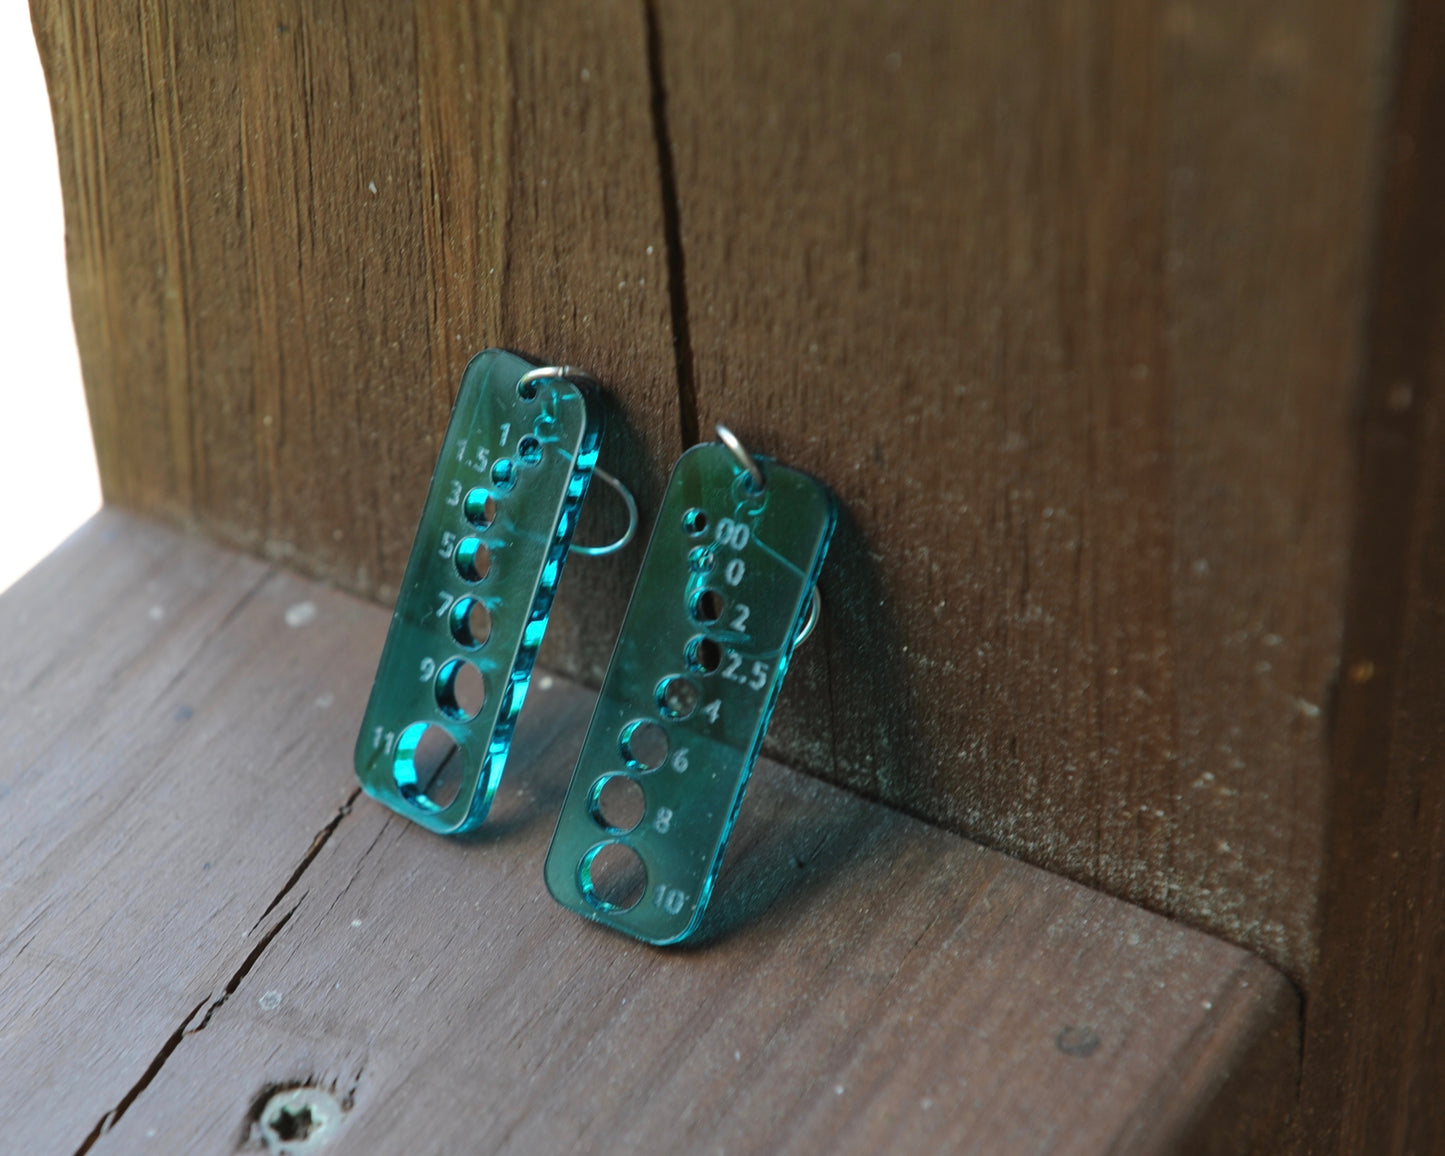 Knitting Needle Gauge Earrings - Assorted Transparent Acrylic